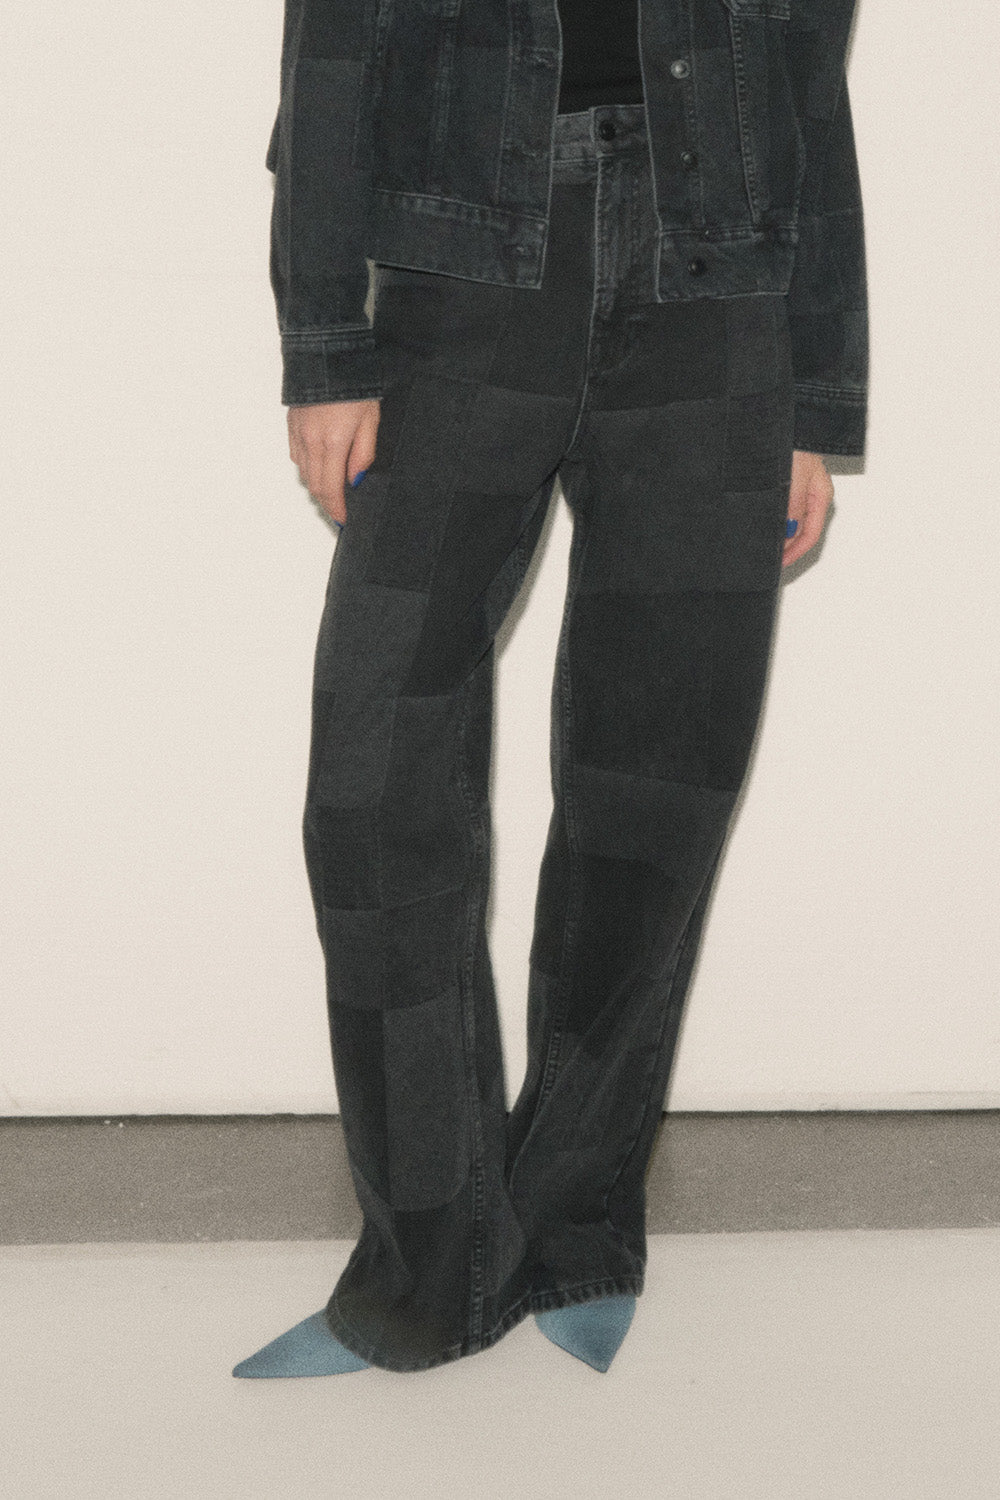 IVY Copenhagen IVY-Brooke Patchwork Jeans Wash Black Jeans & Pants 9 Black